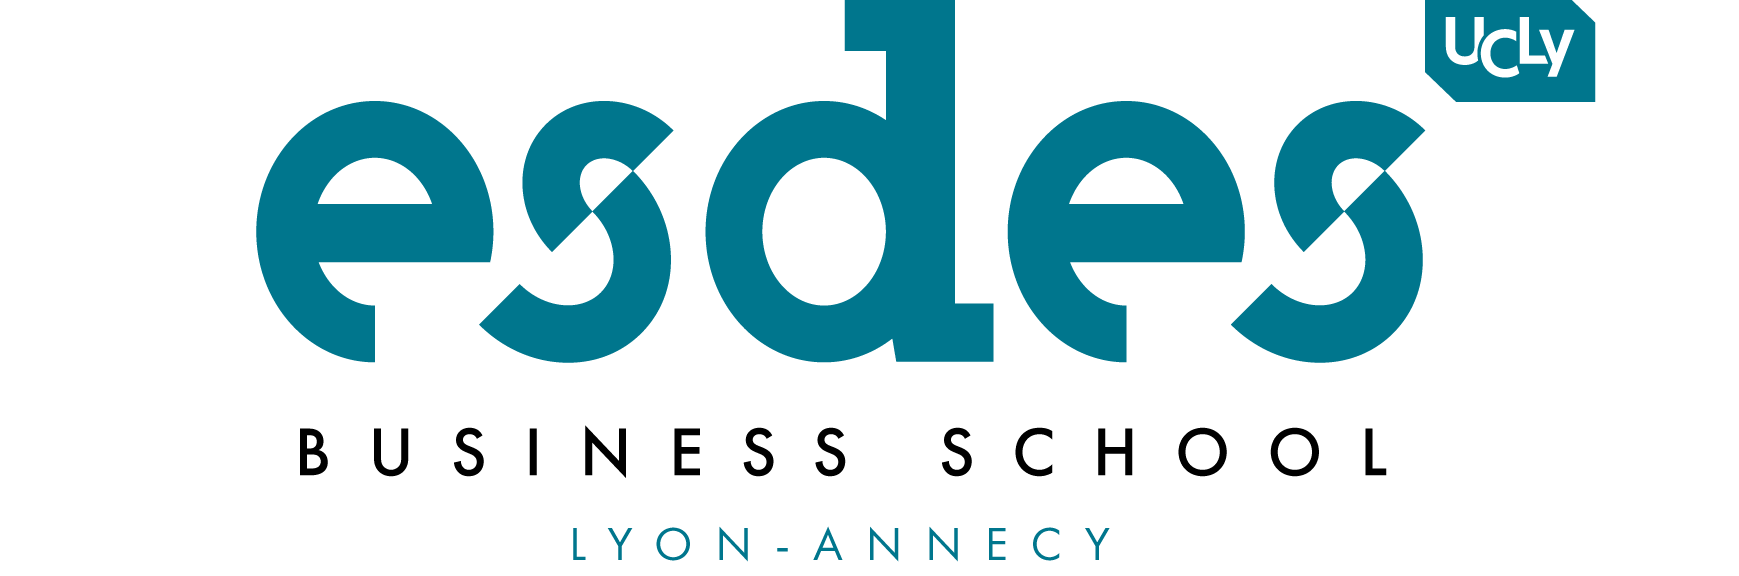 esdes-university-logo